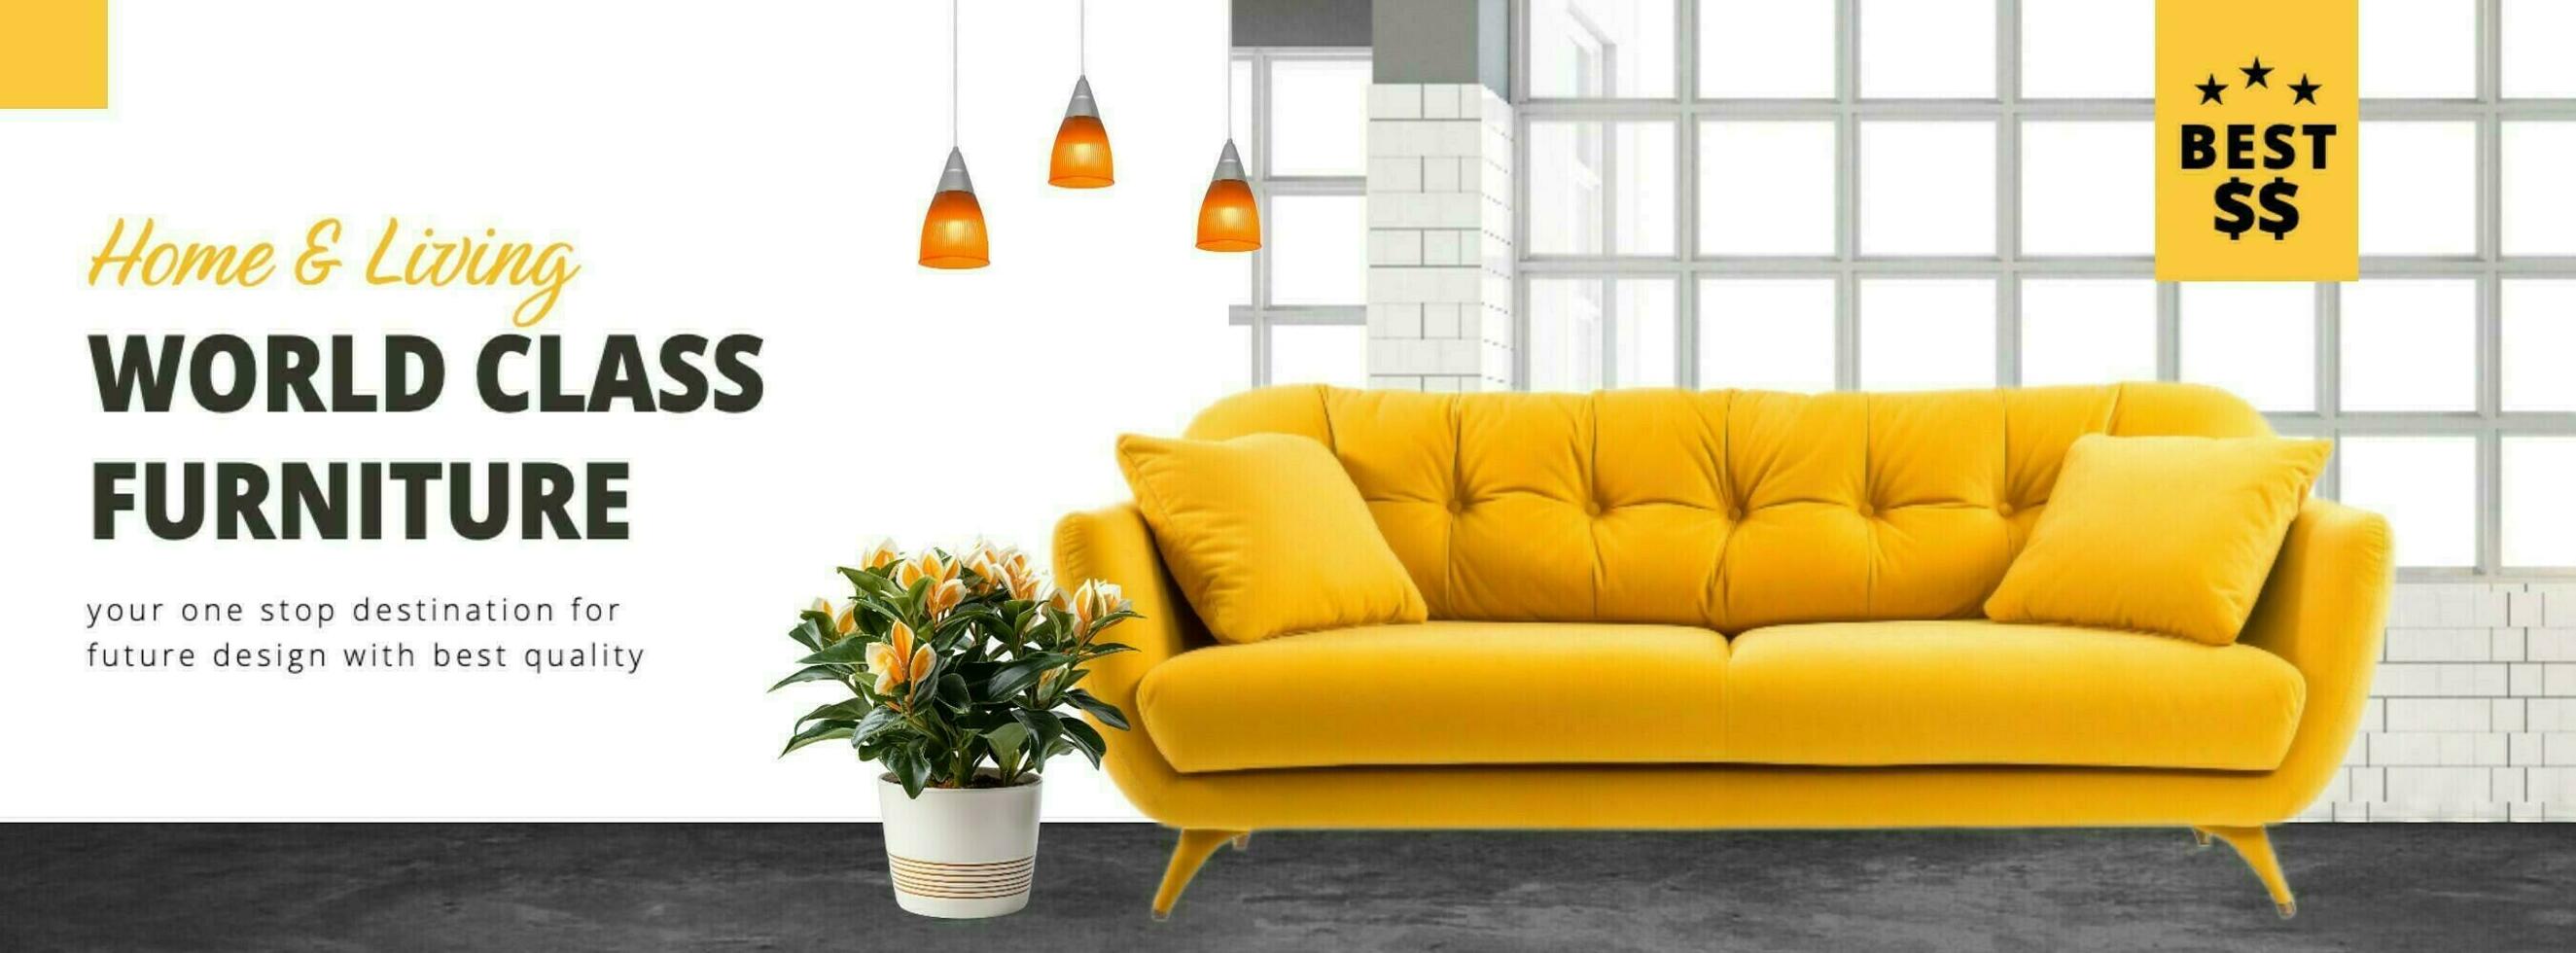 furniture yellow sofa minimalist facebook cover design template social media ideas